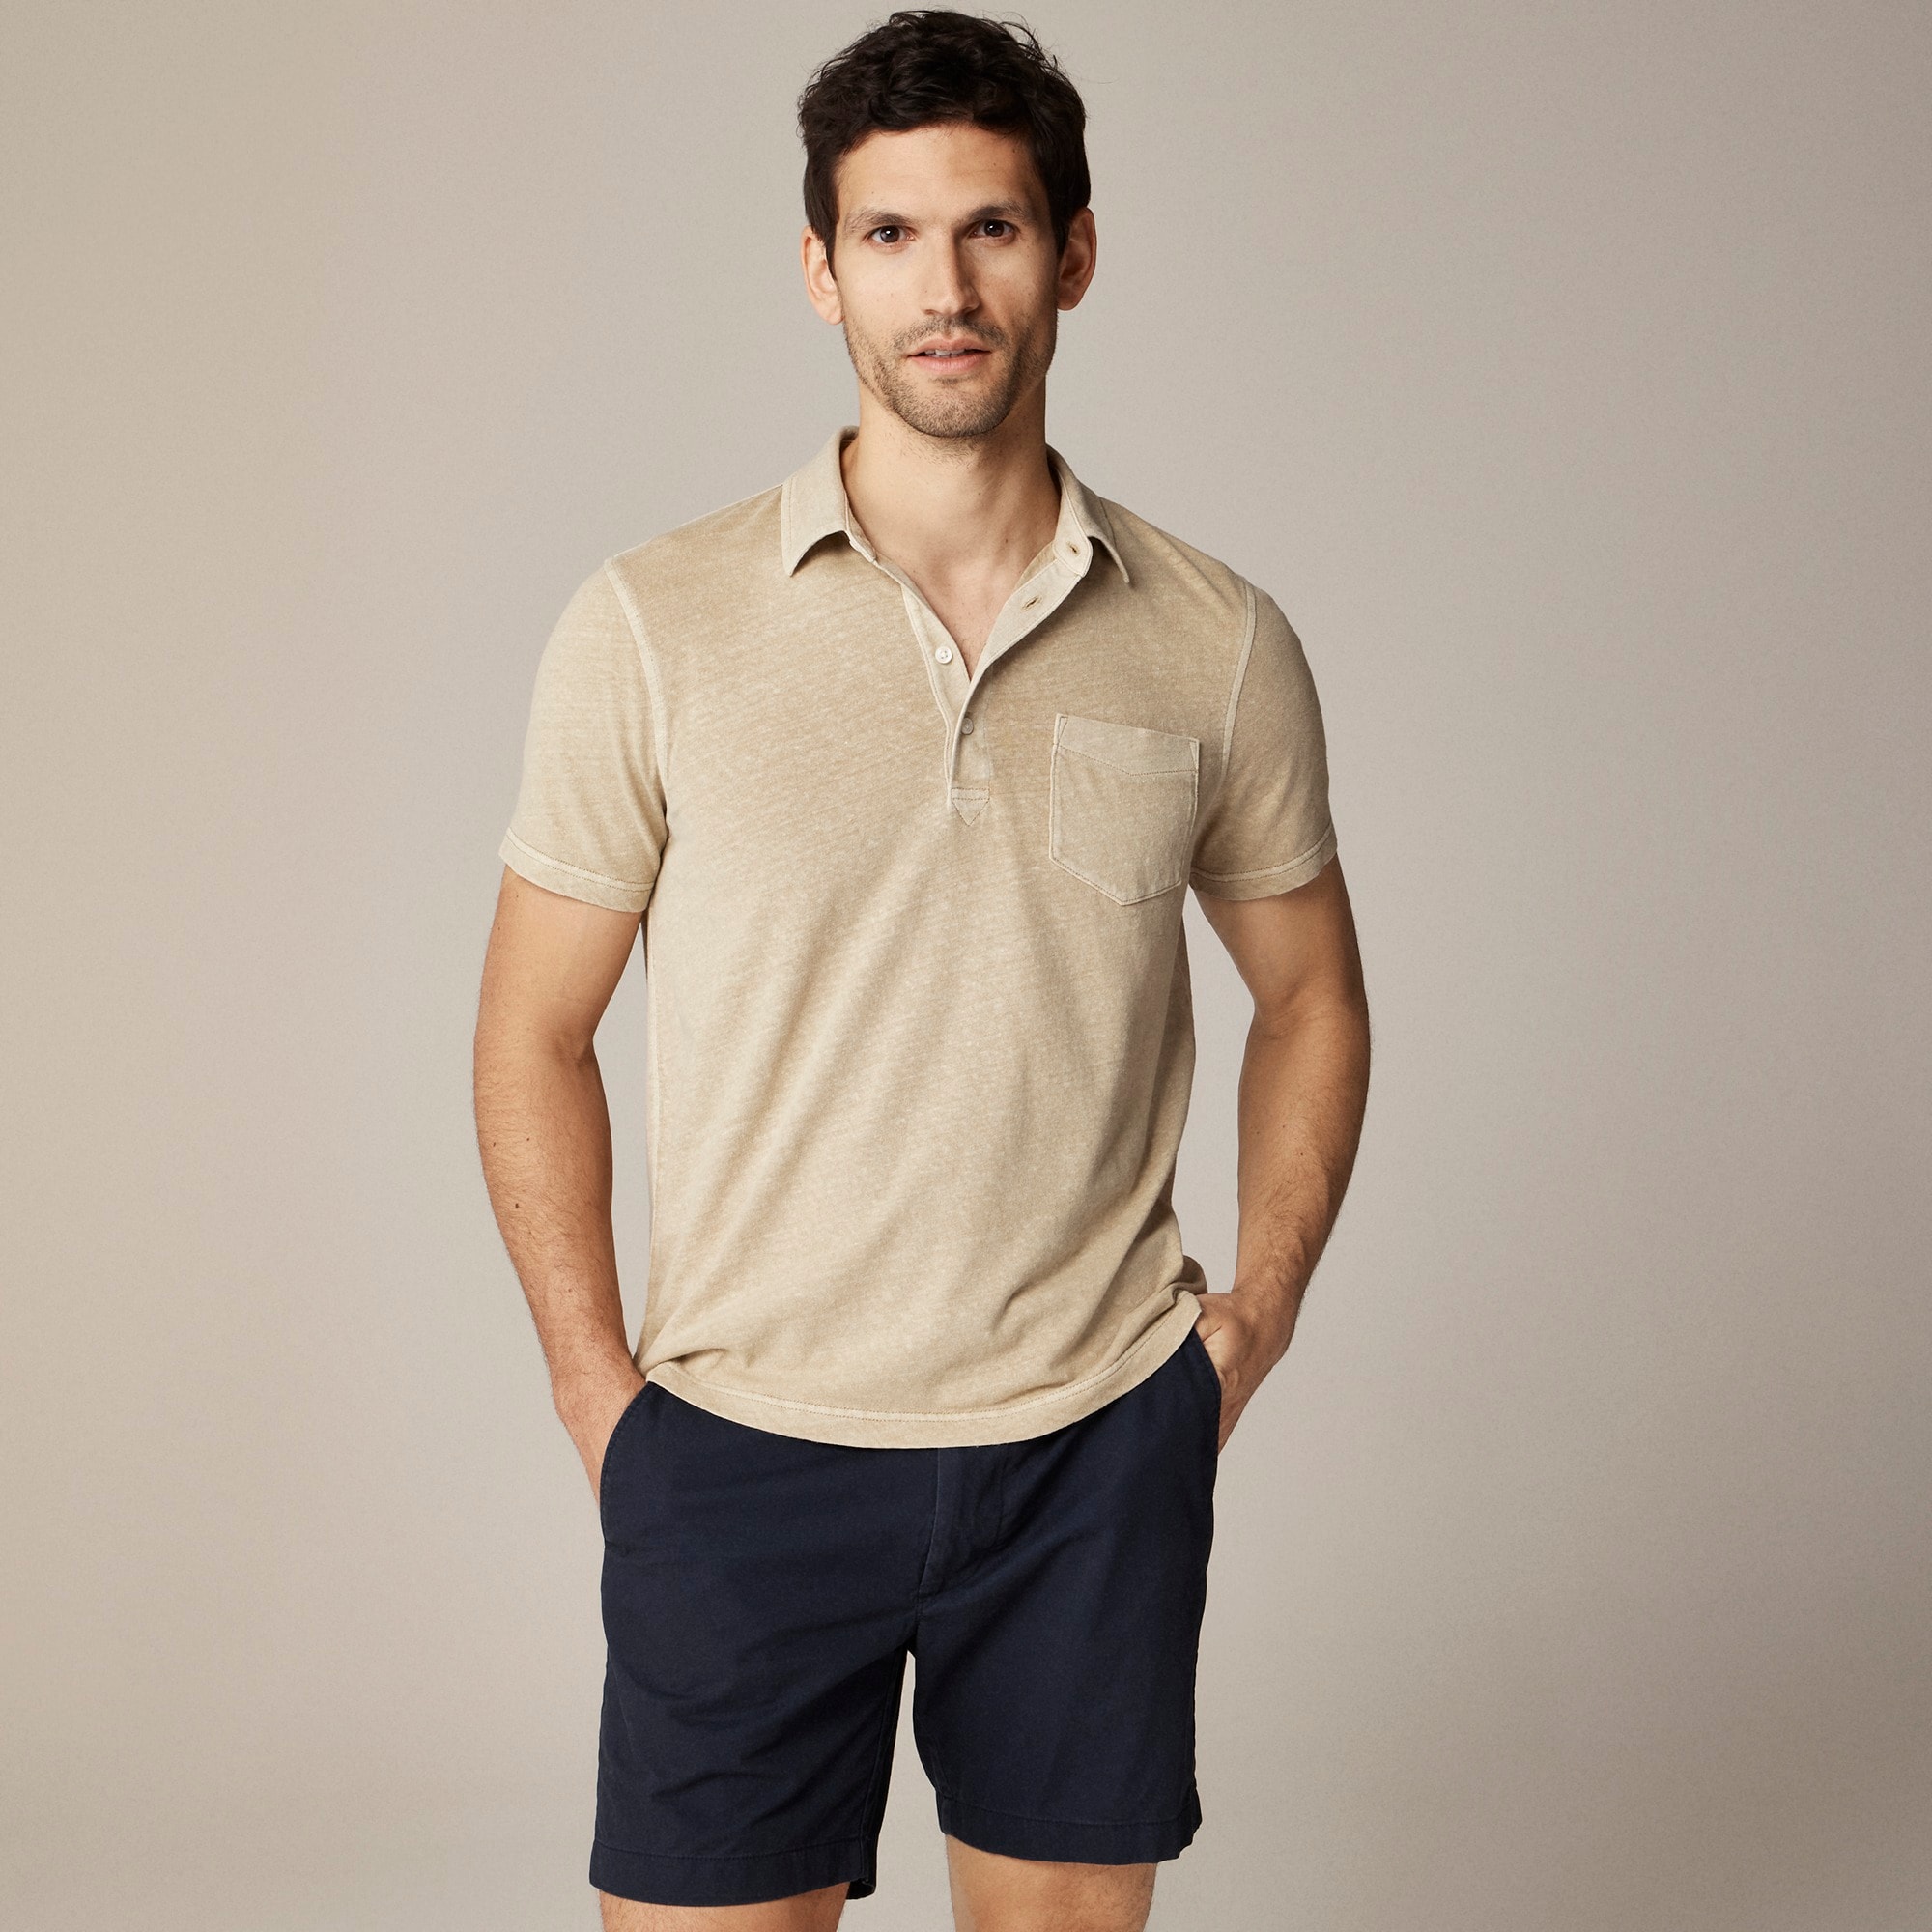 j.crew: hemp-organic cotton blend polo shirt for men